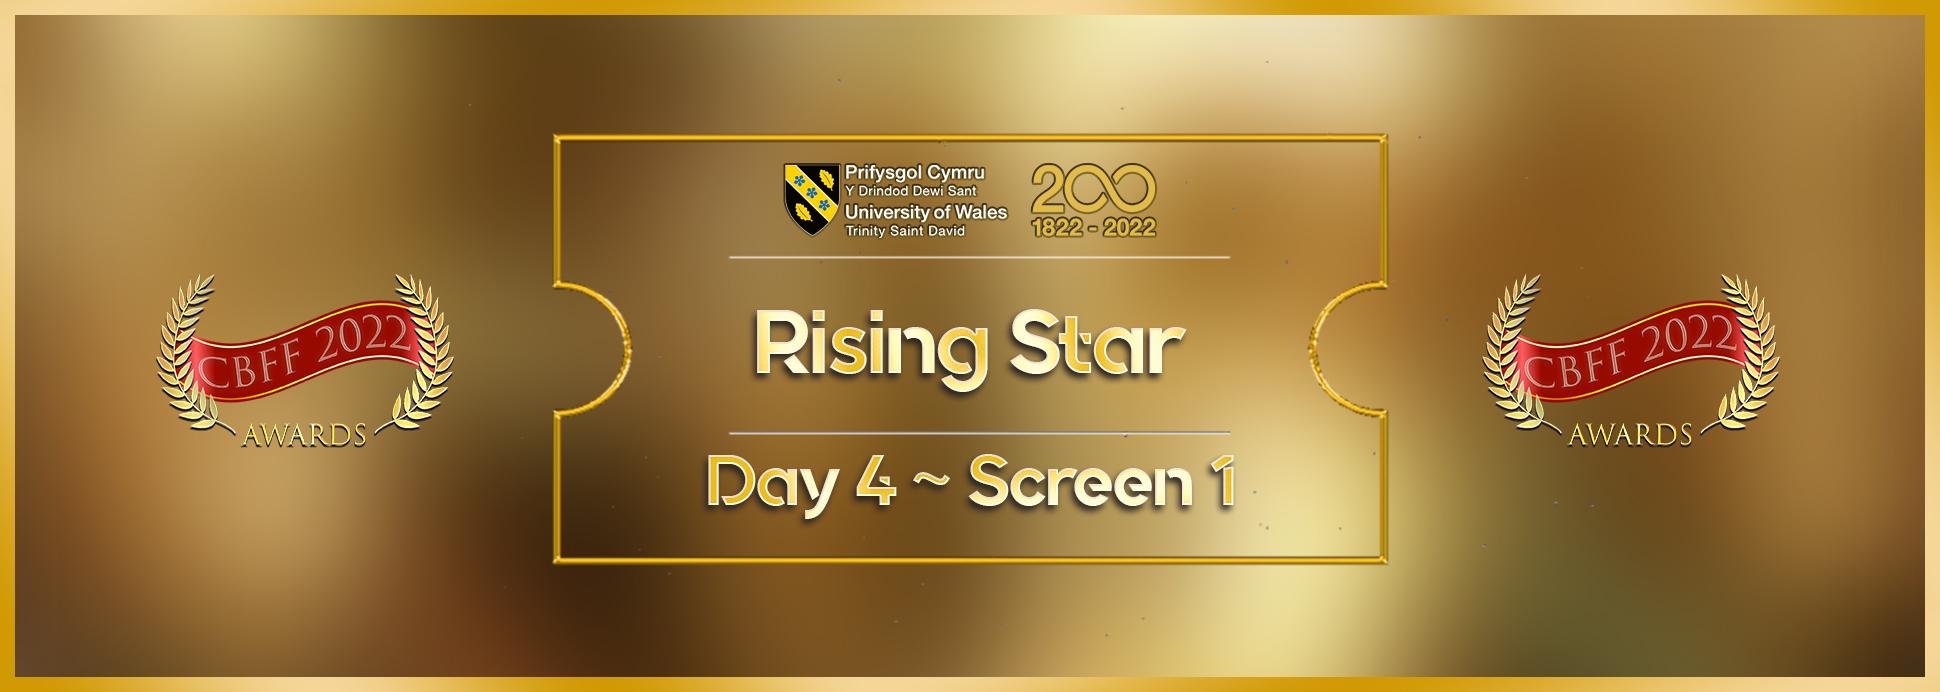 Day 4 Screen 1 Rising Star